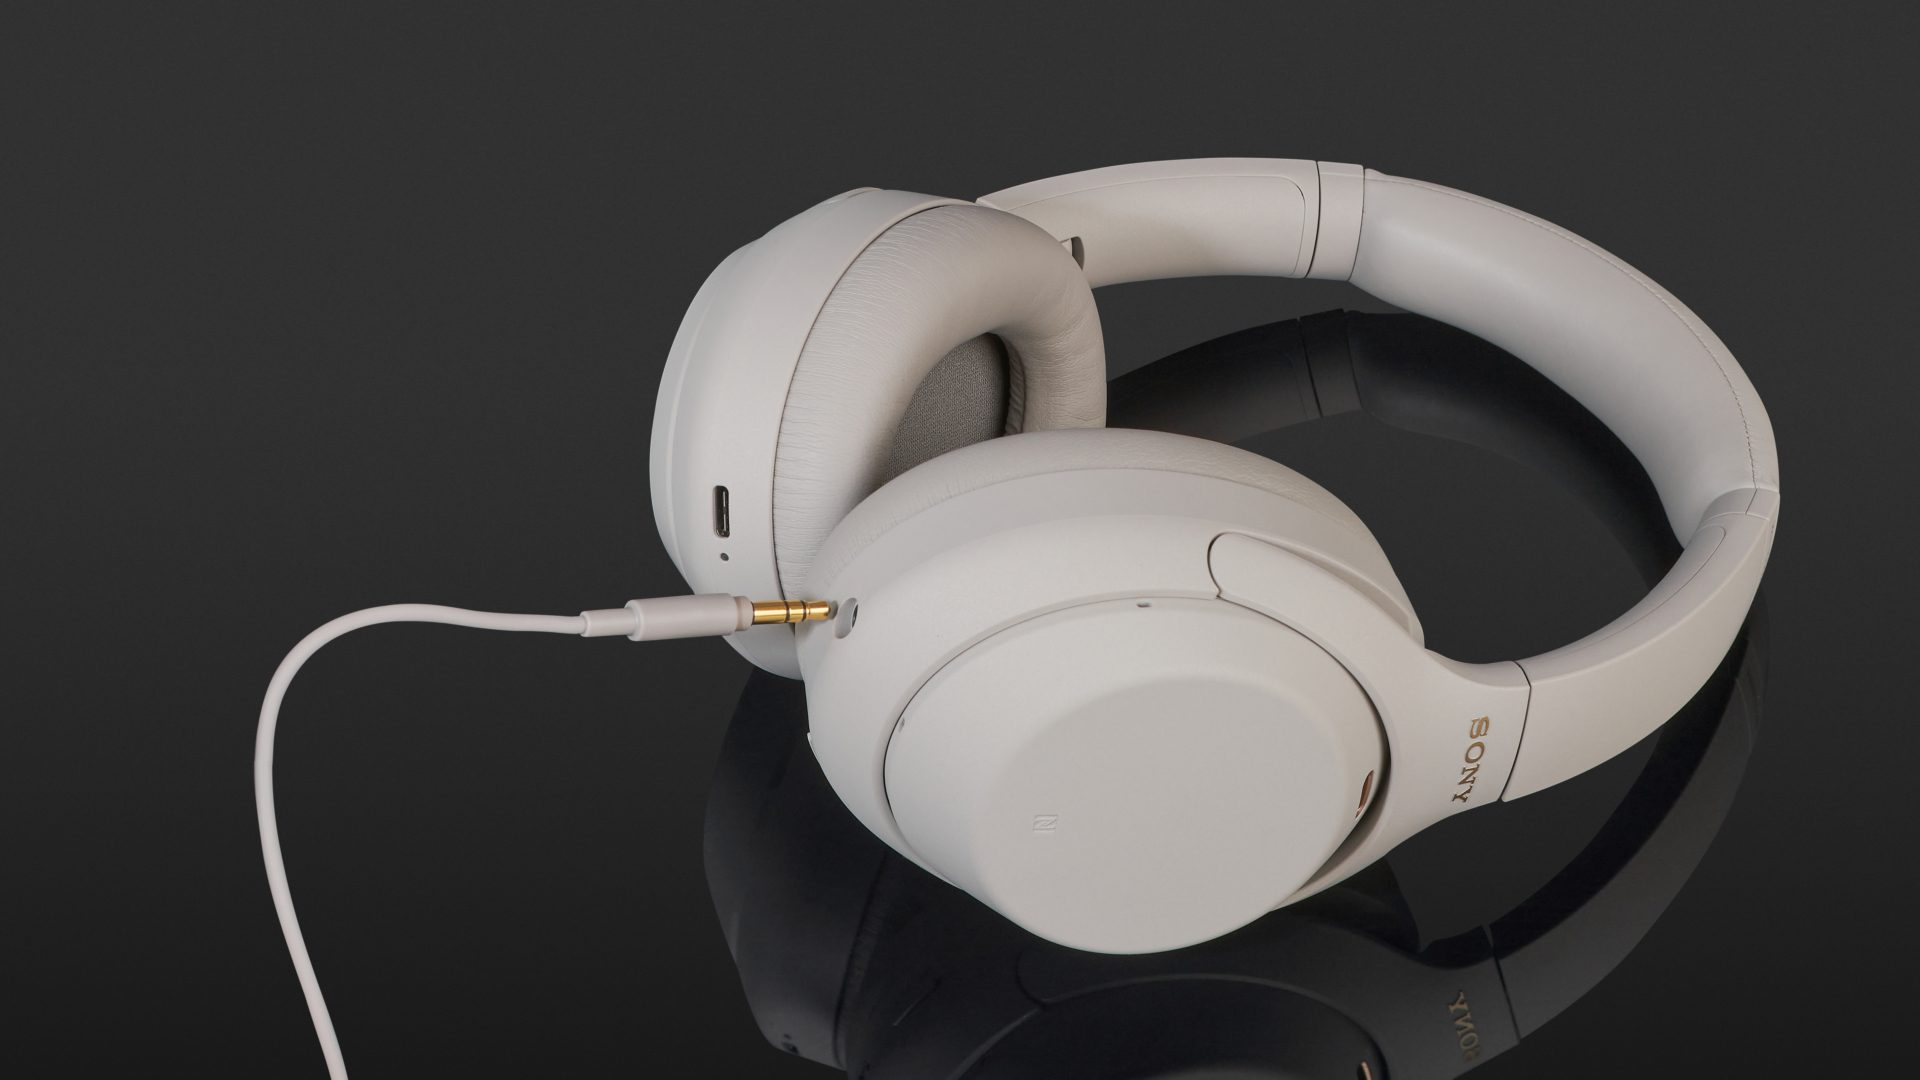 Sony WH-1000XM4 Wireless Over-Ear Headphones Black Active Noise Canceling  XM4